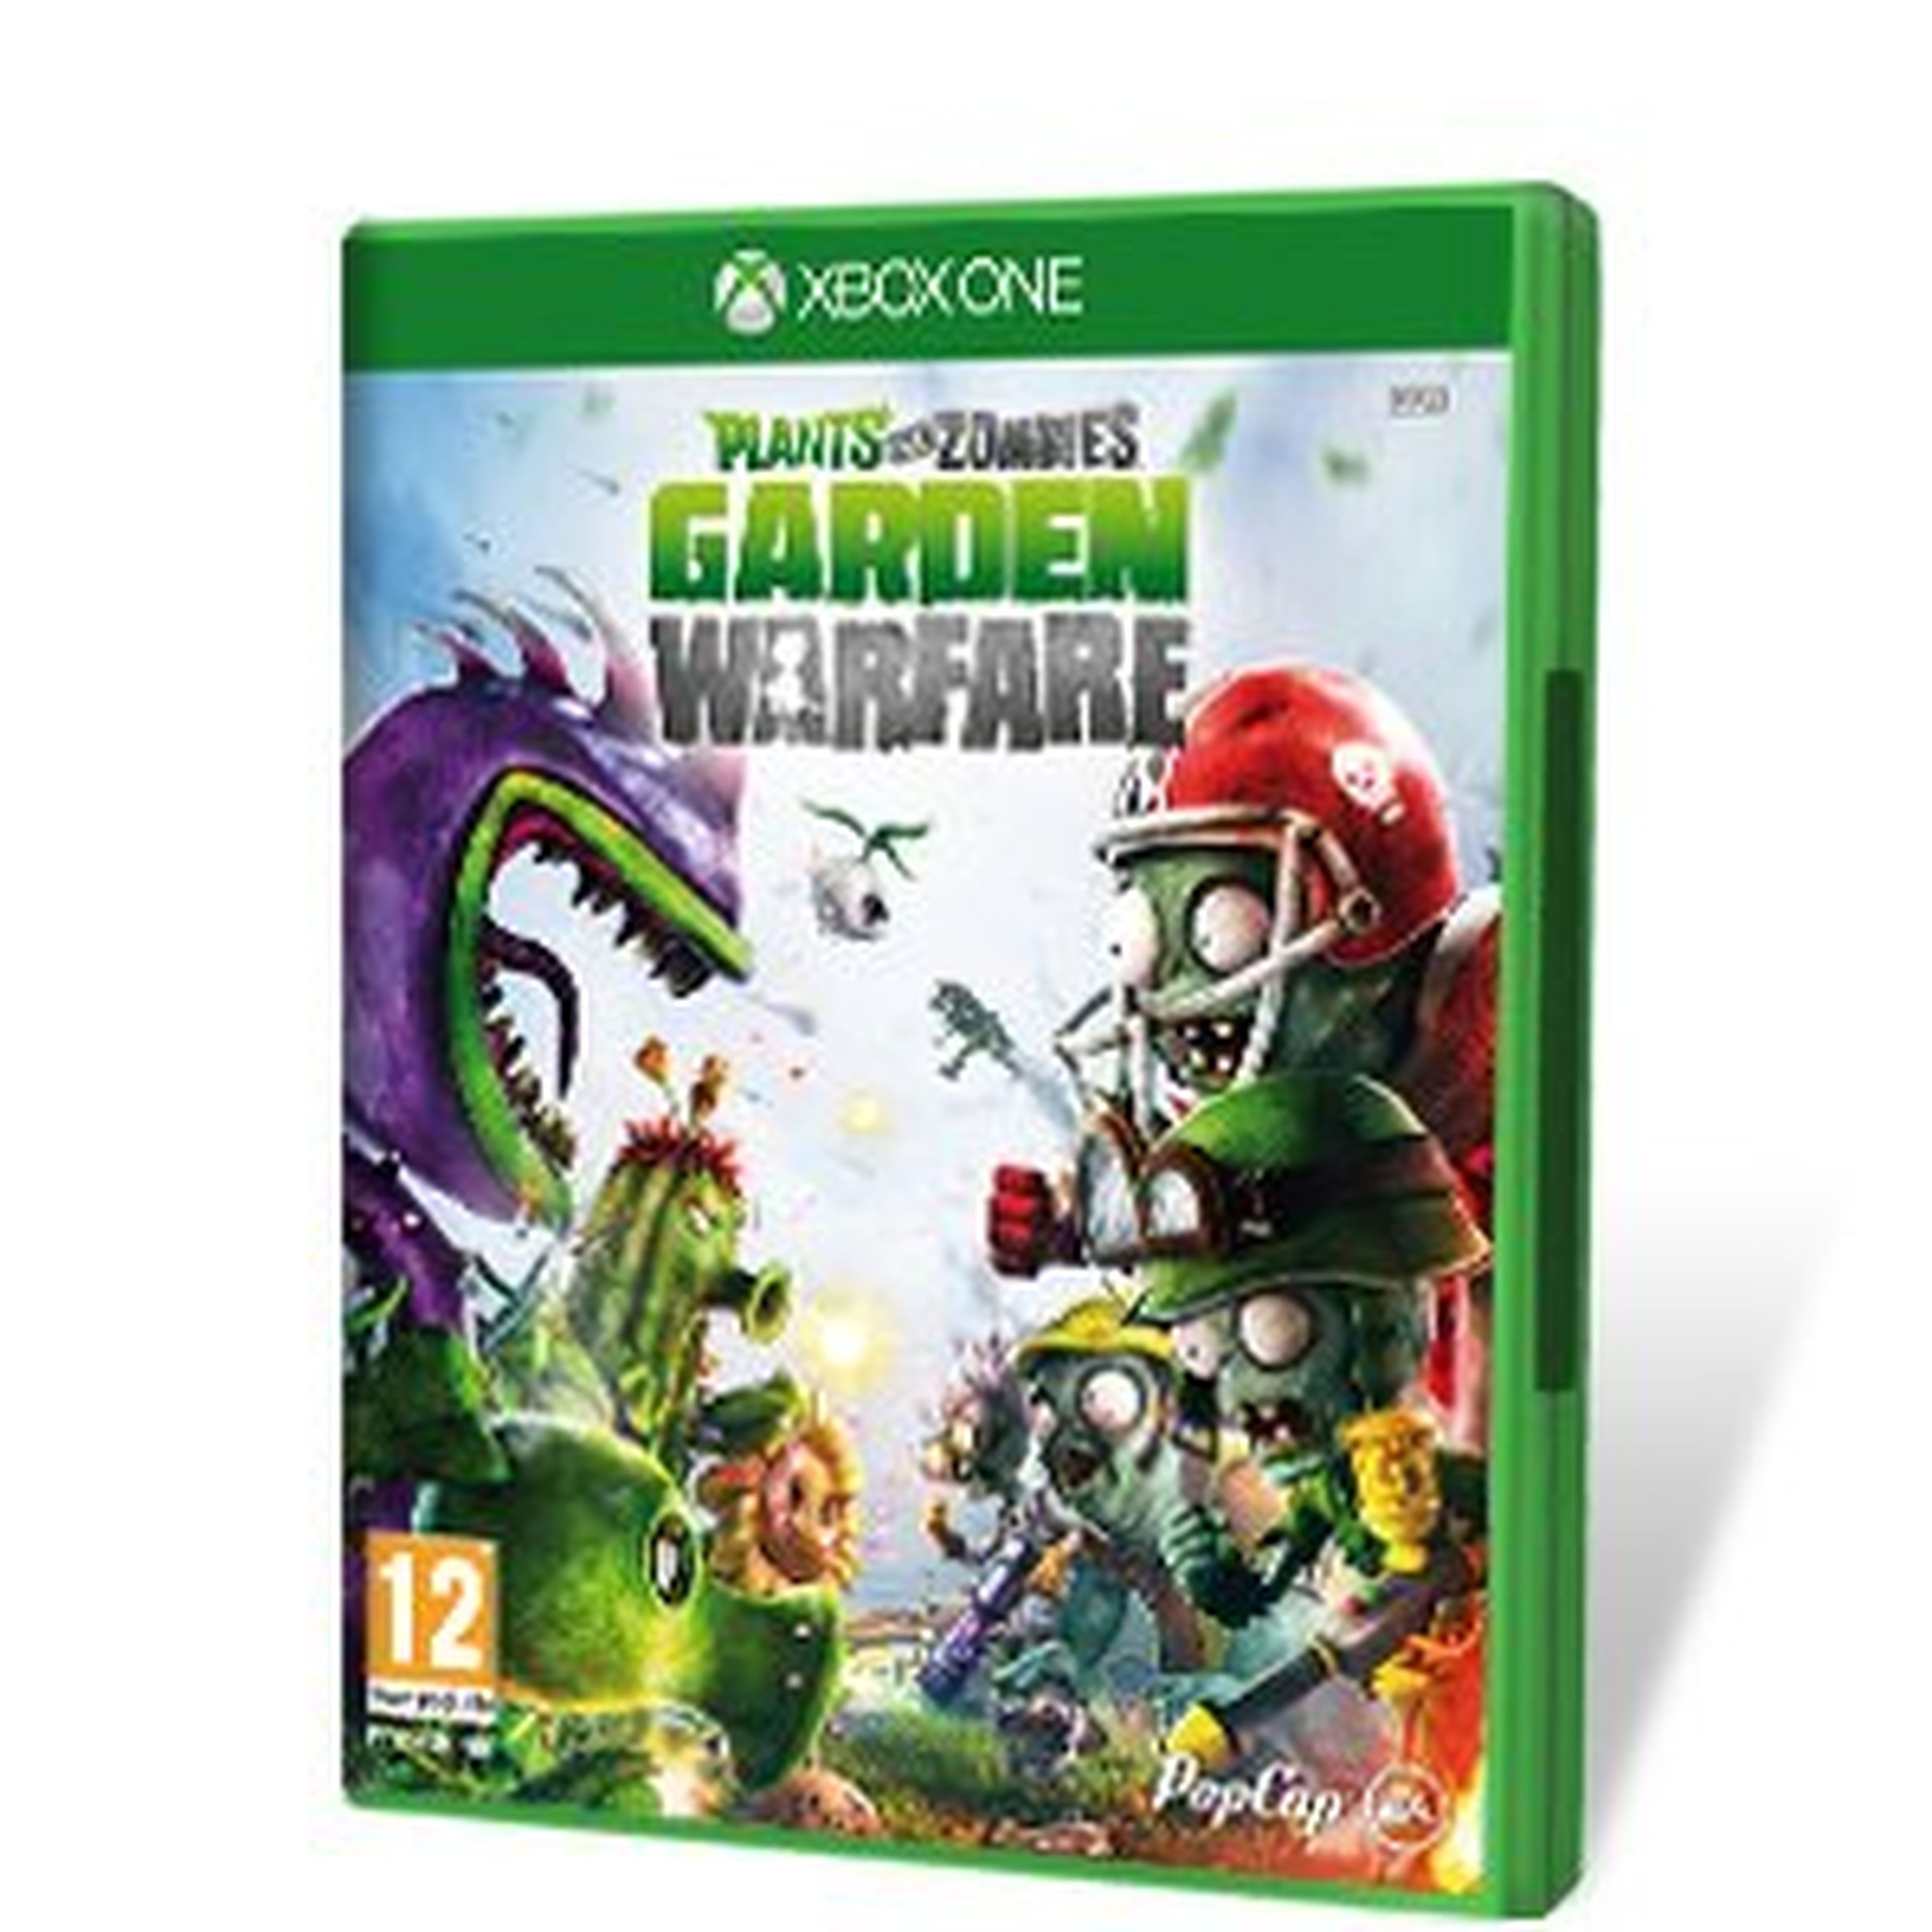 Plants vs Zombies Garden Warfare para Xbox One